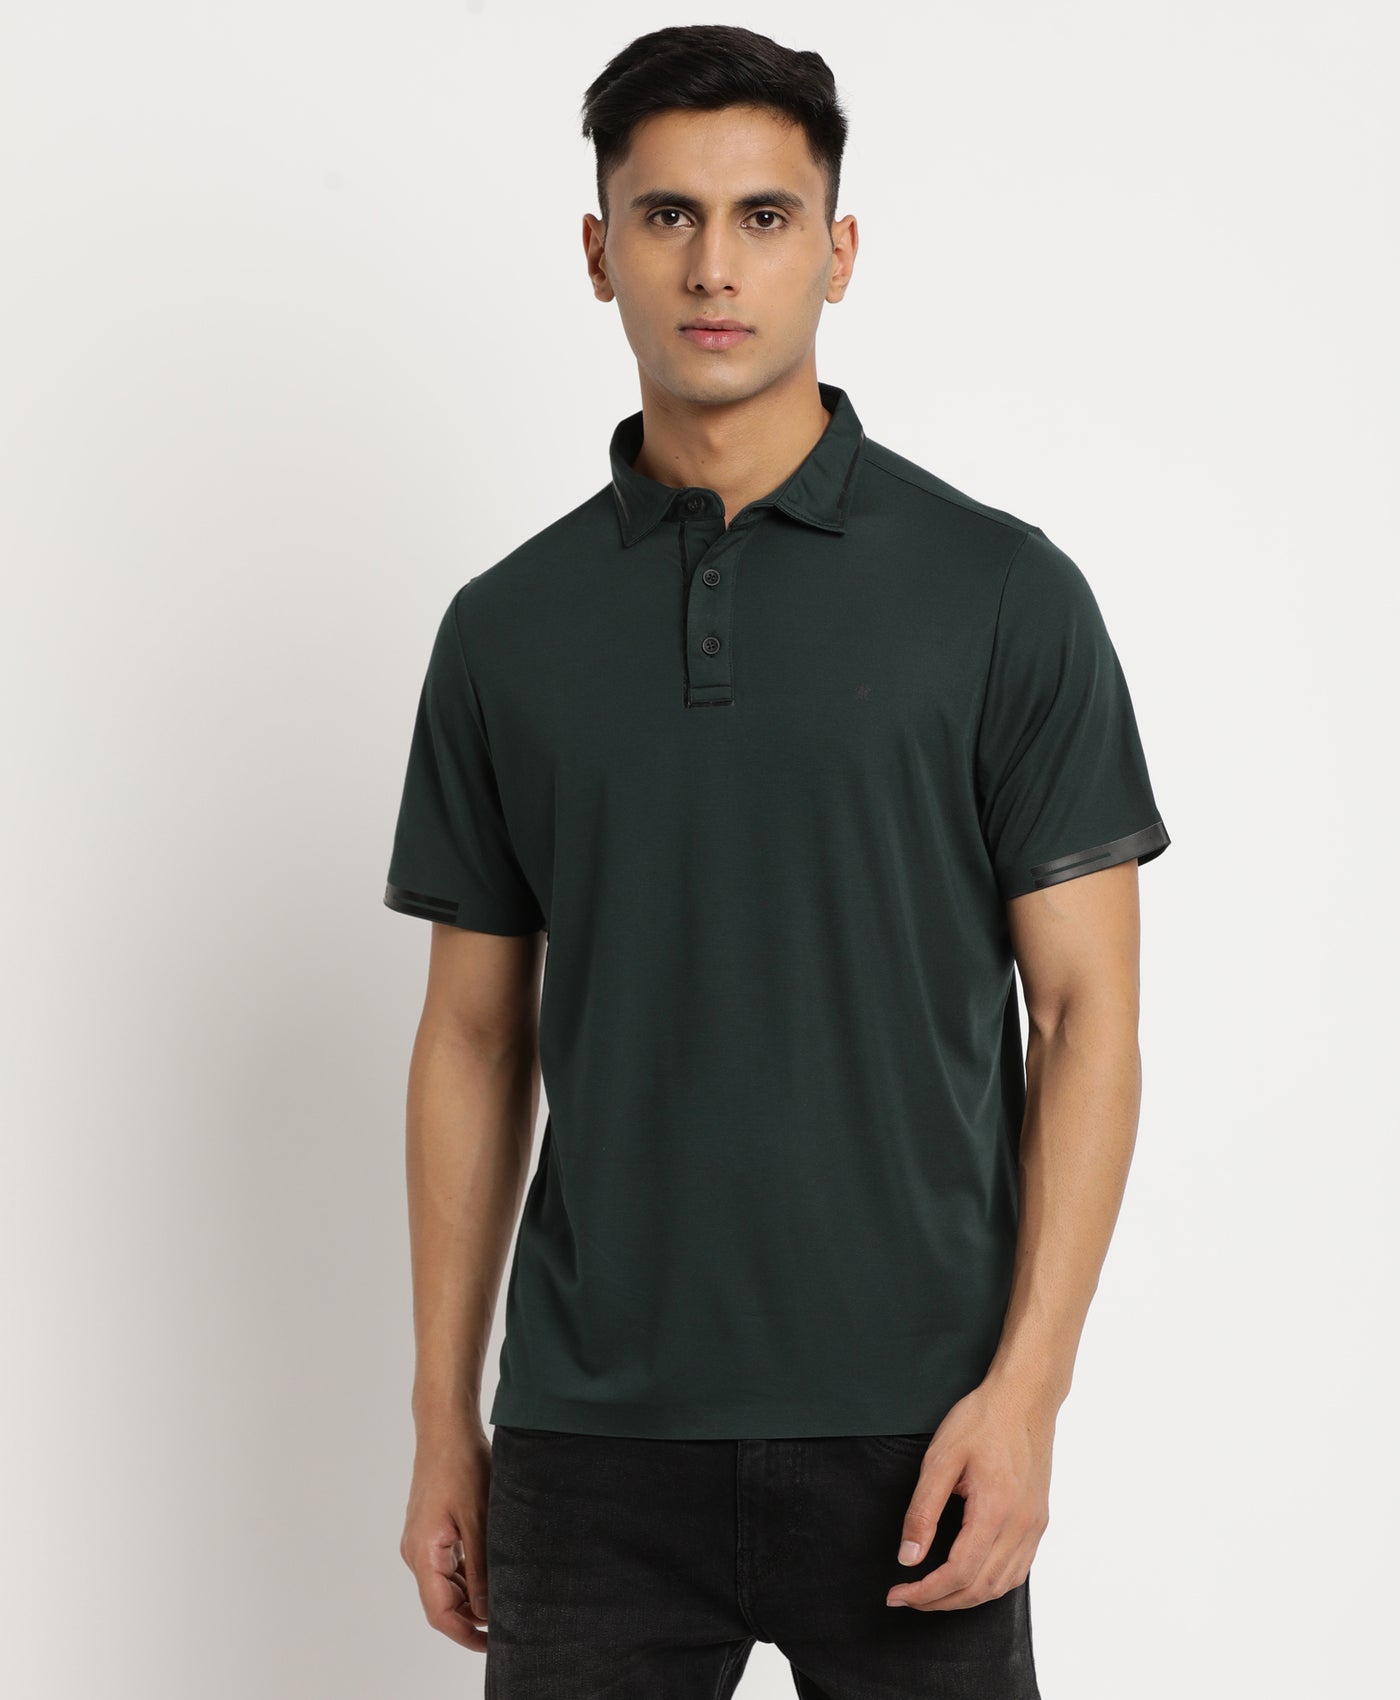 Cotton Dark Green Printed Polo Neck T-Shirts